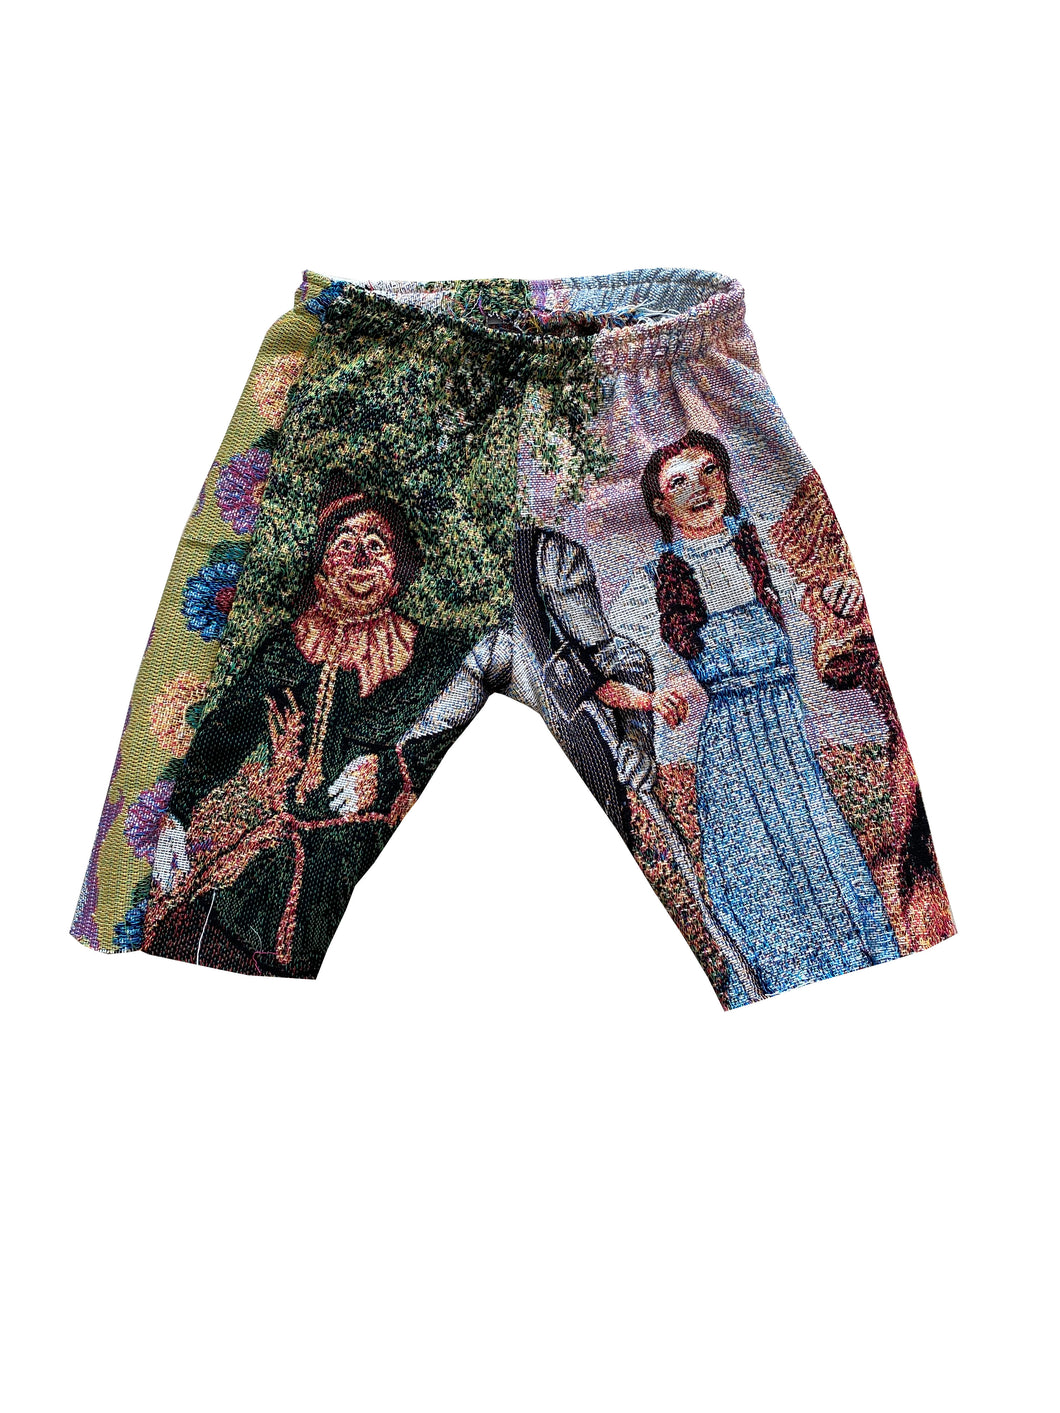 Wizard of Oz shorts